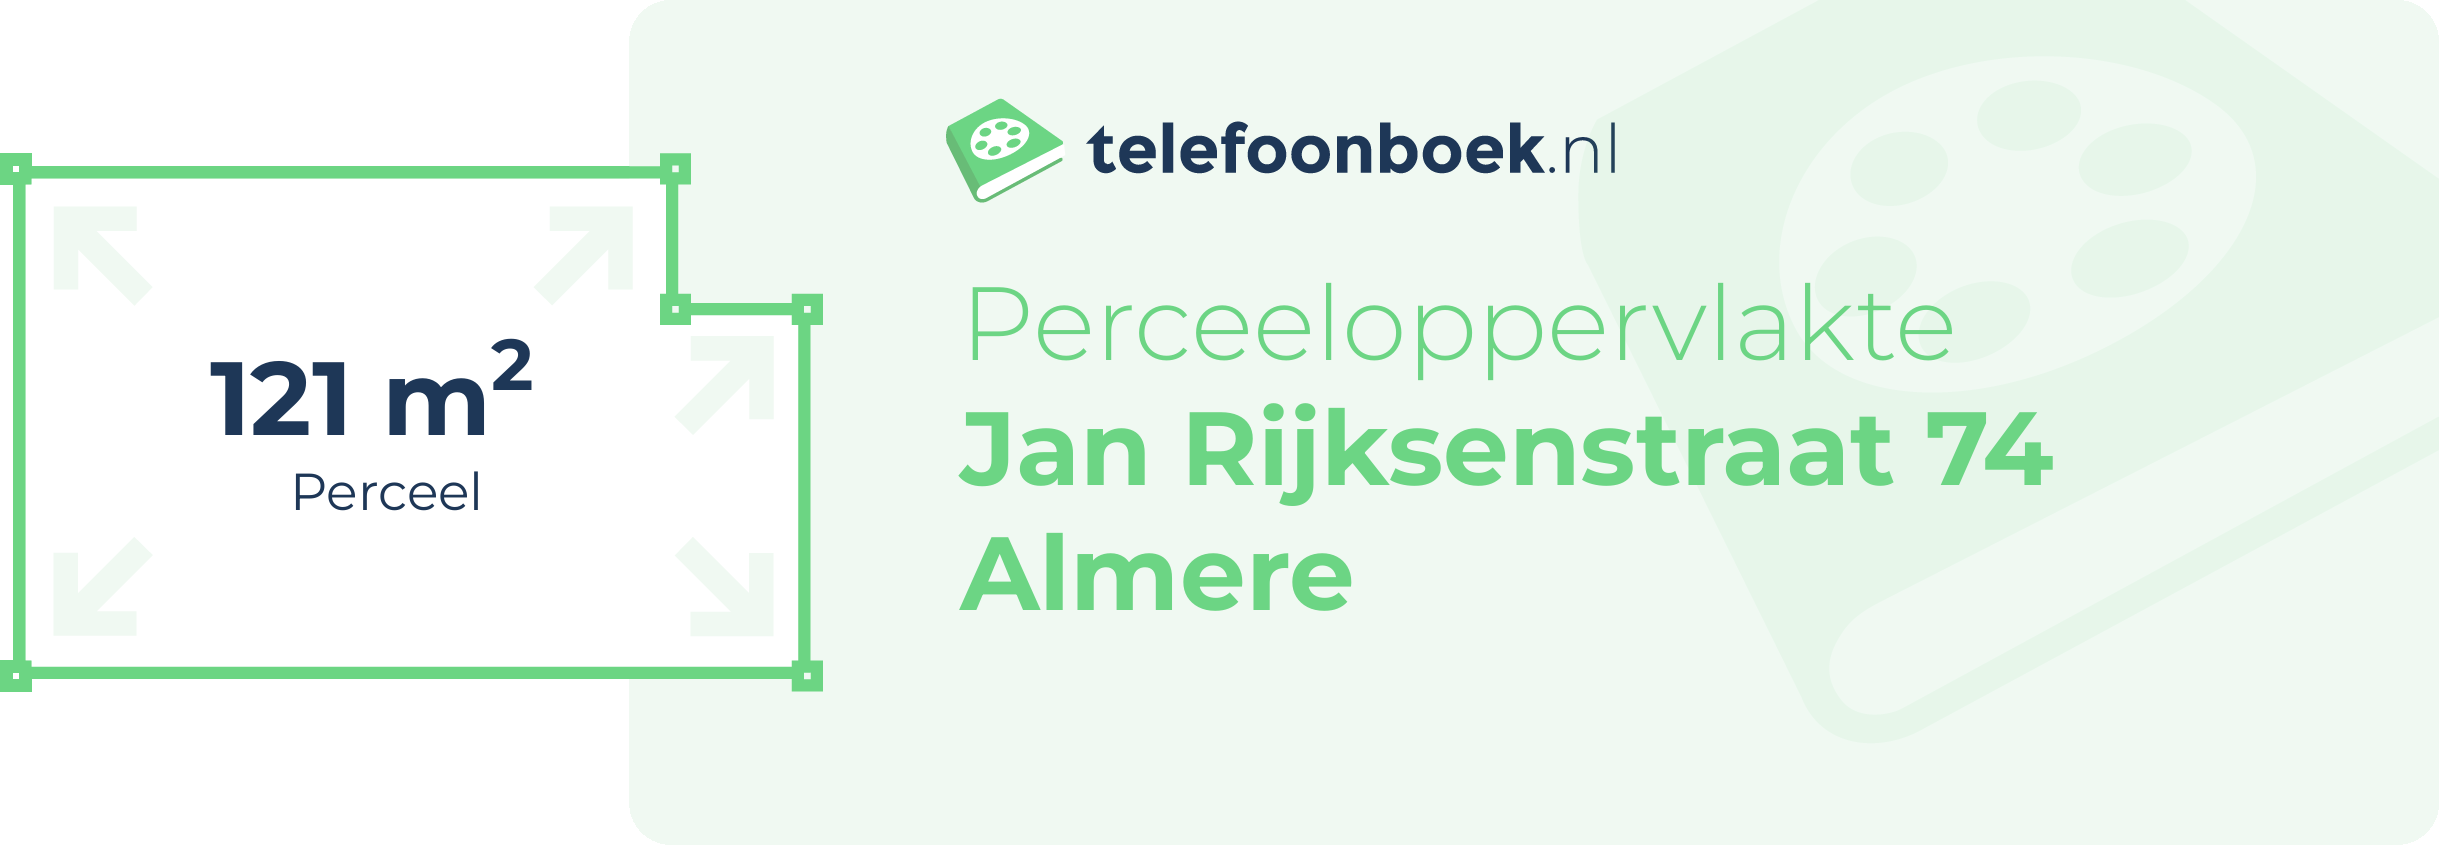 Perceeloppervlakte Jan Rijksenstraat 74 Almere